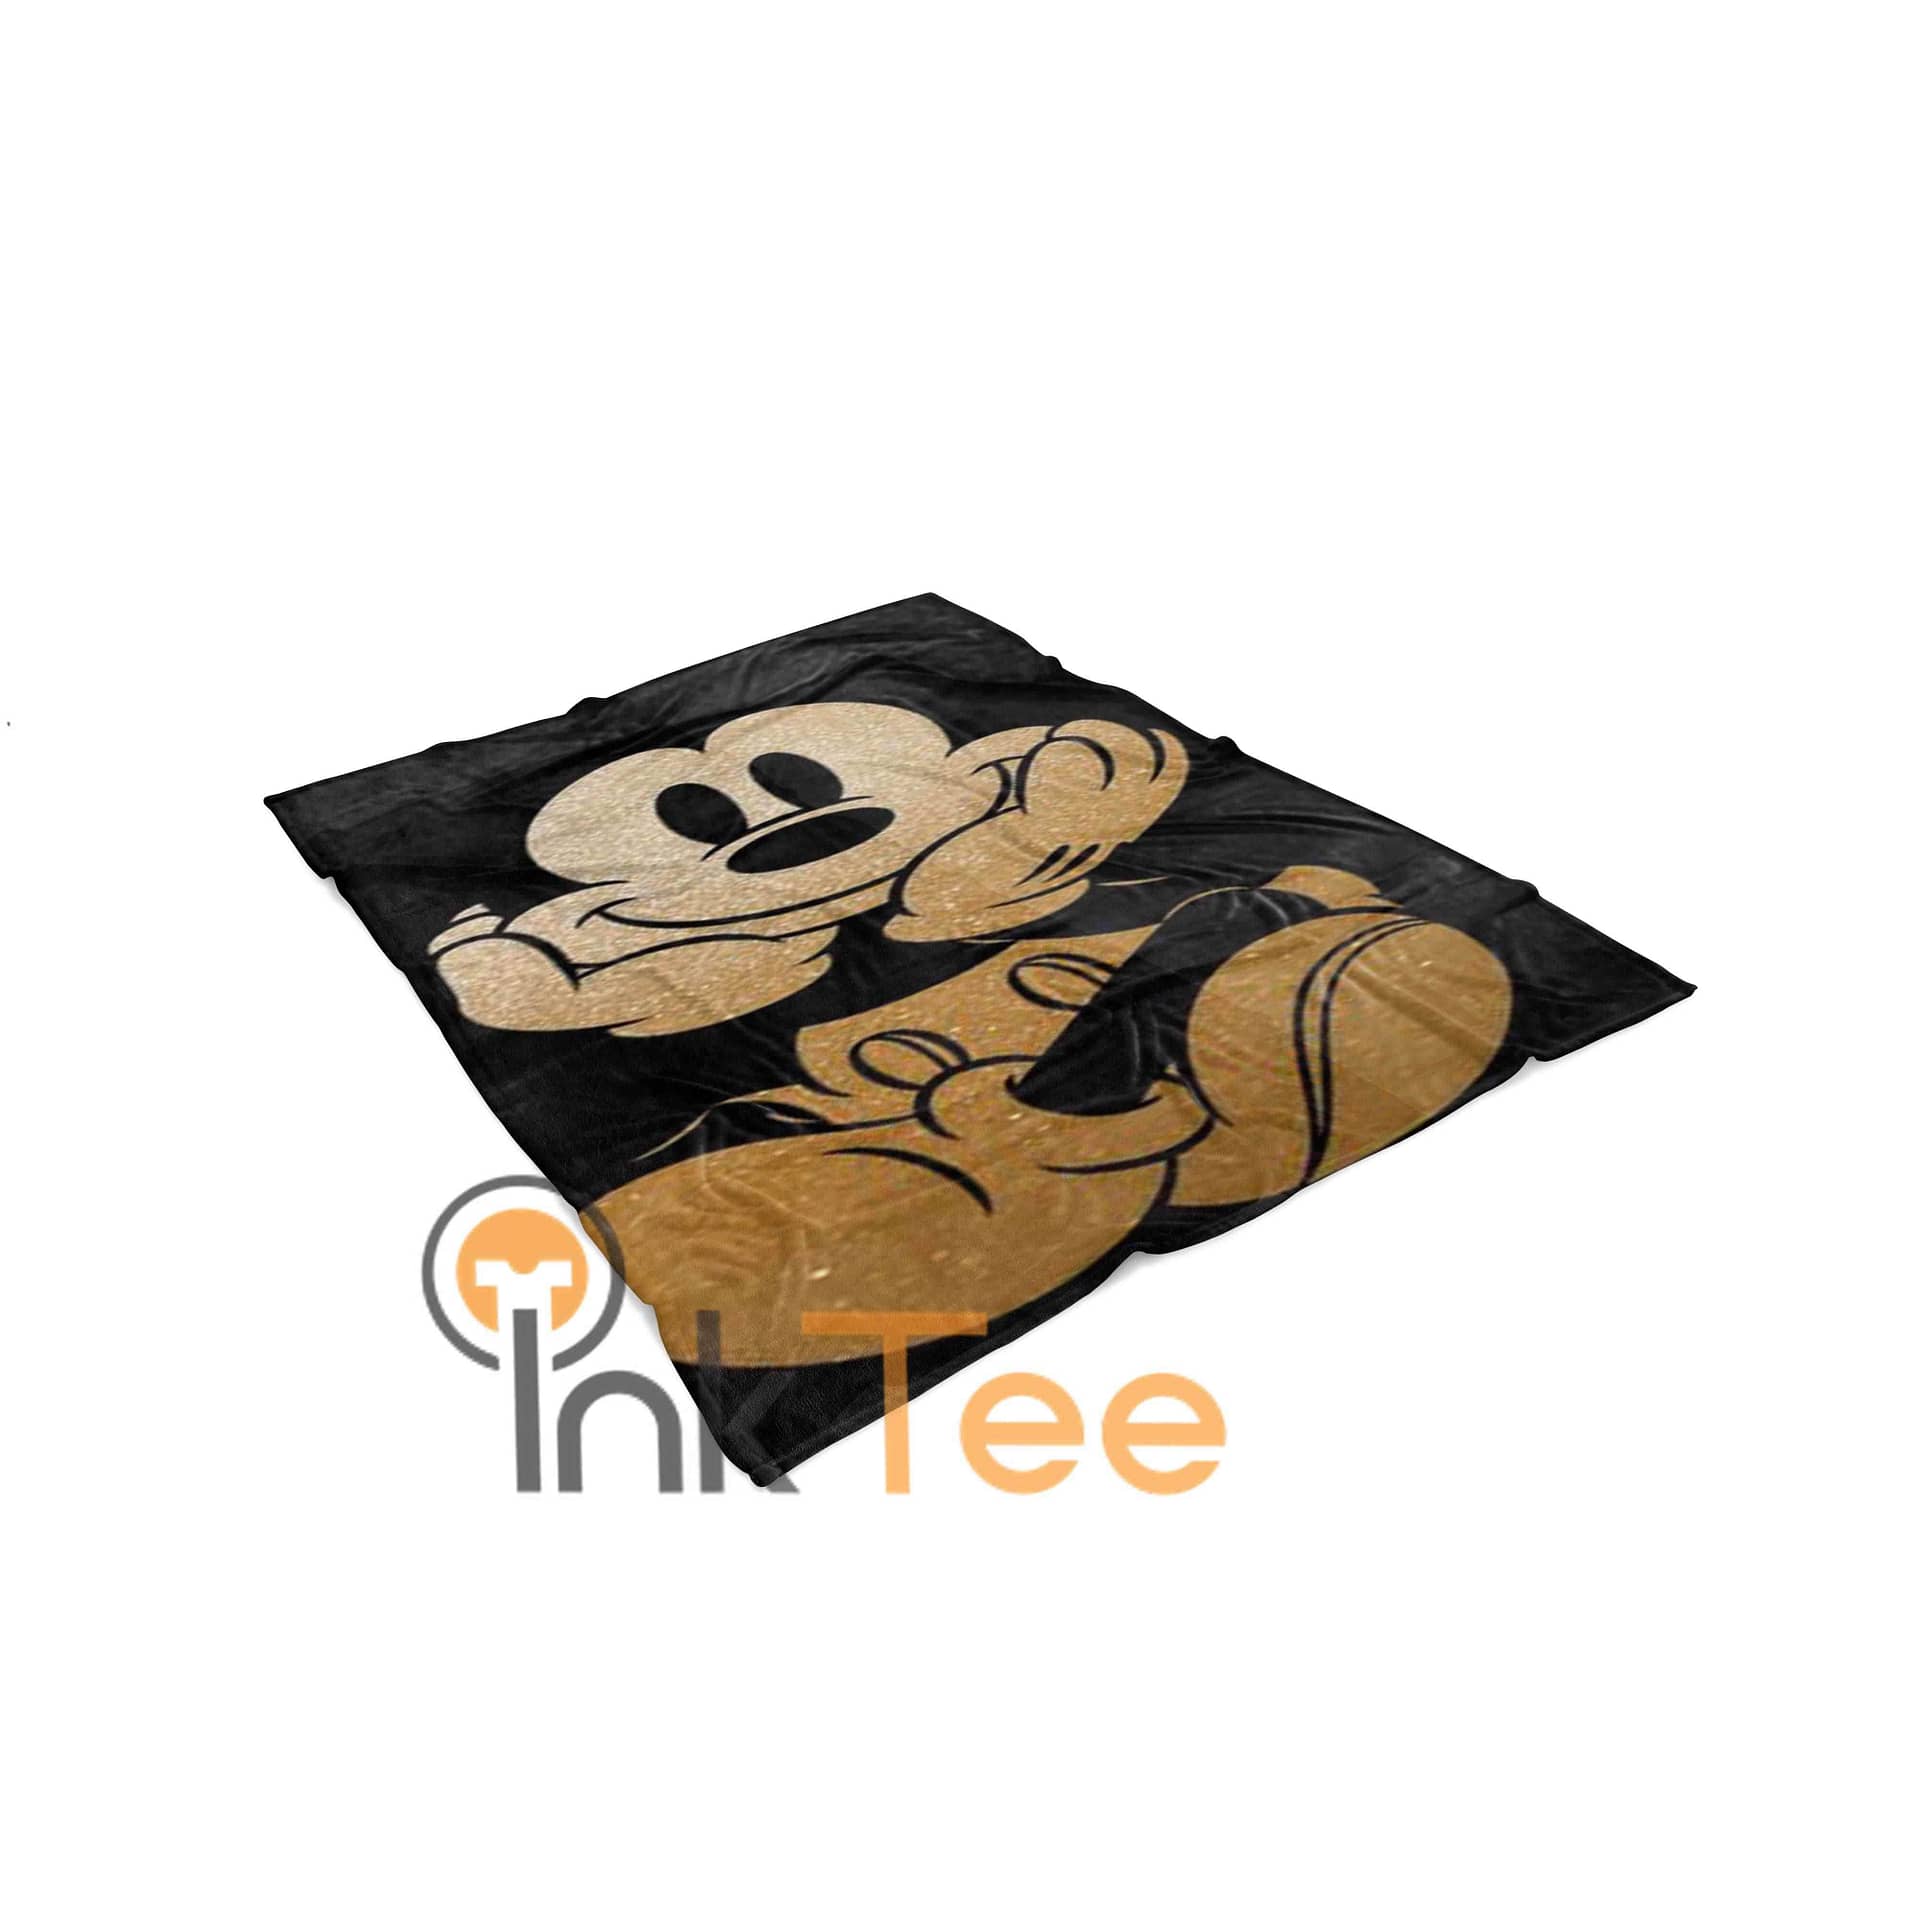 Inktee Store - Mickey Mouse Limited Edition Amazon Best Seller Sku 4085 Fleece Blanket Image